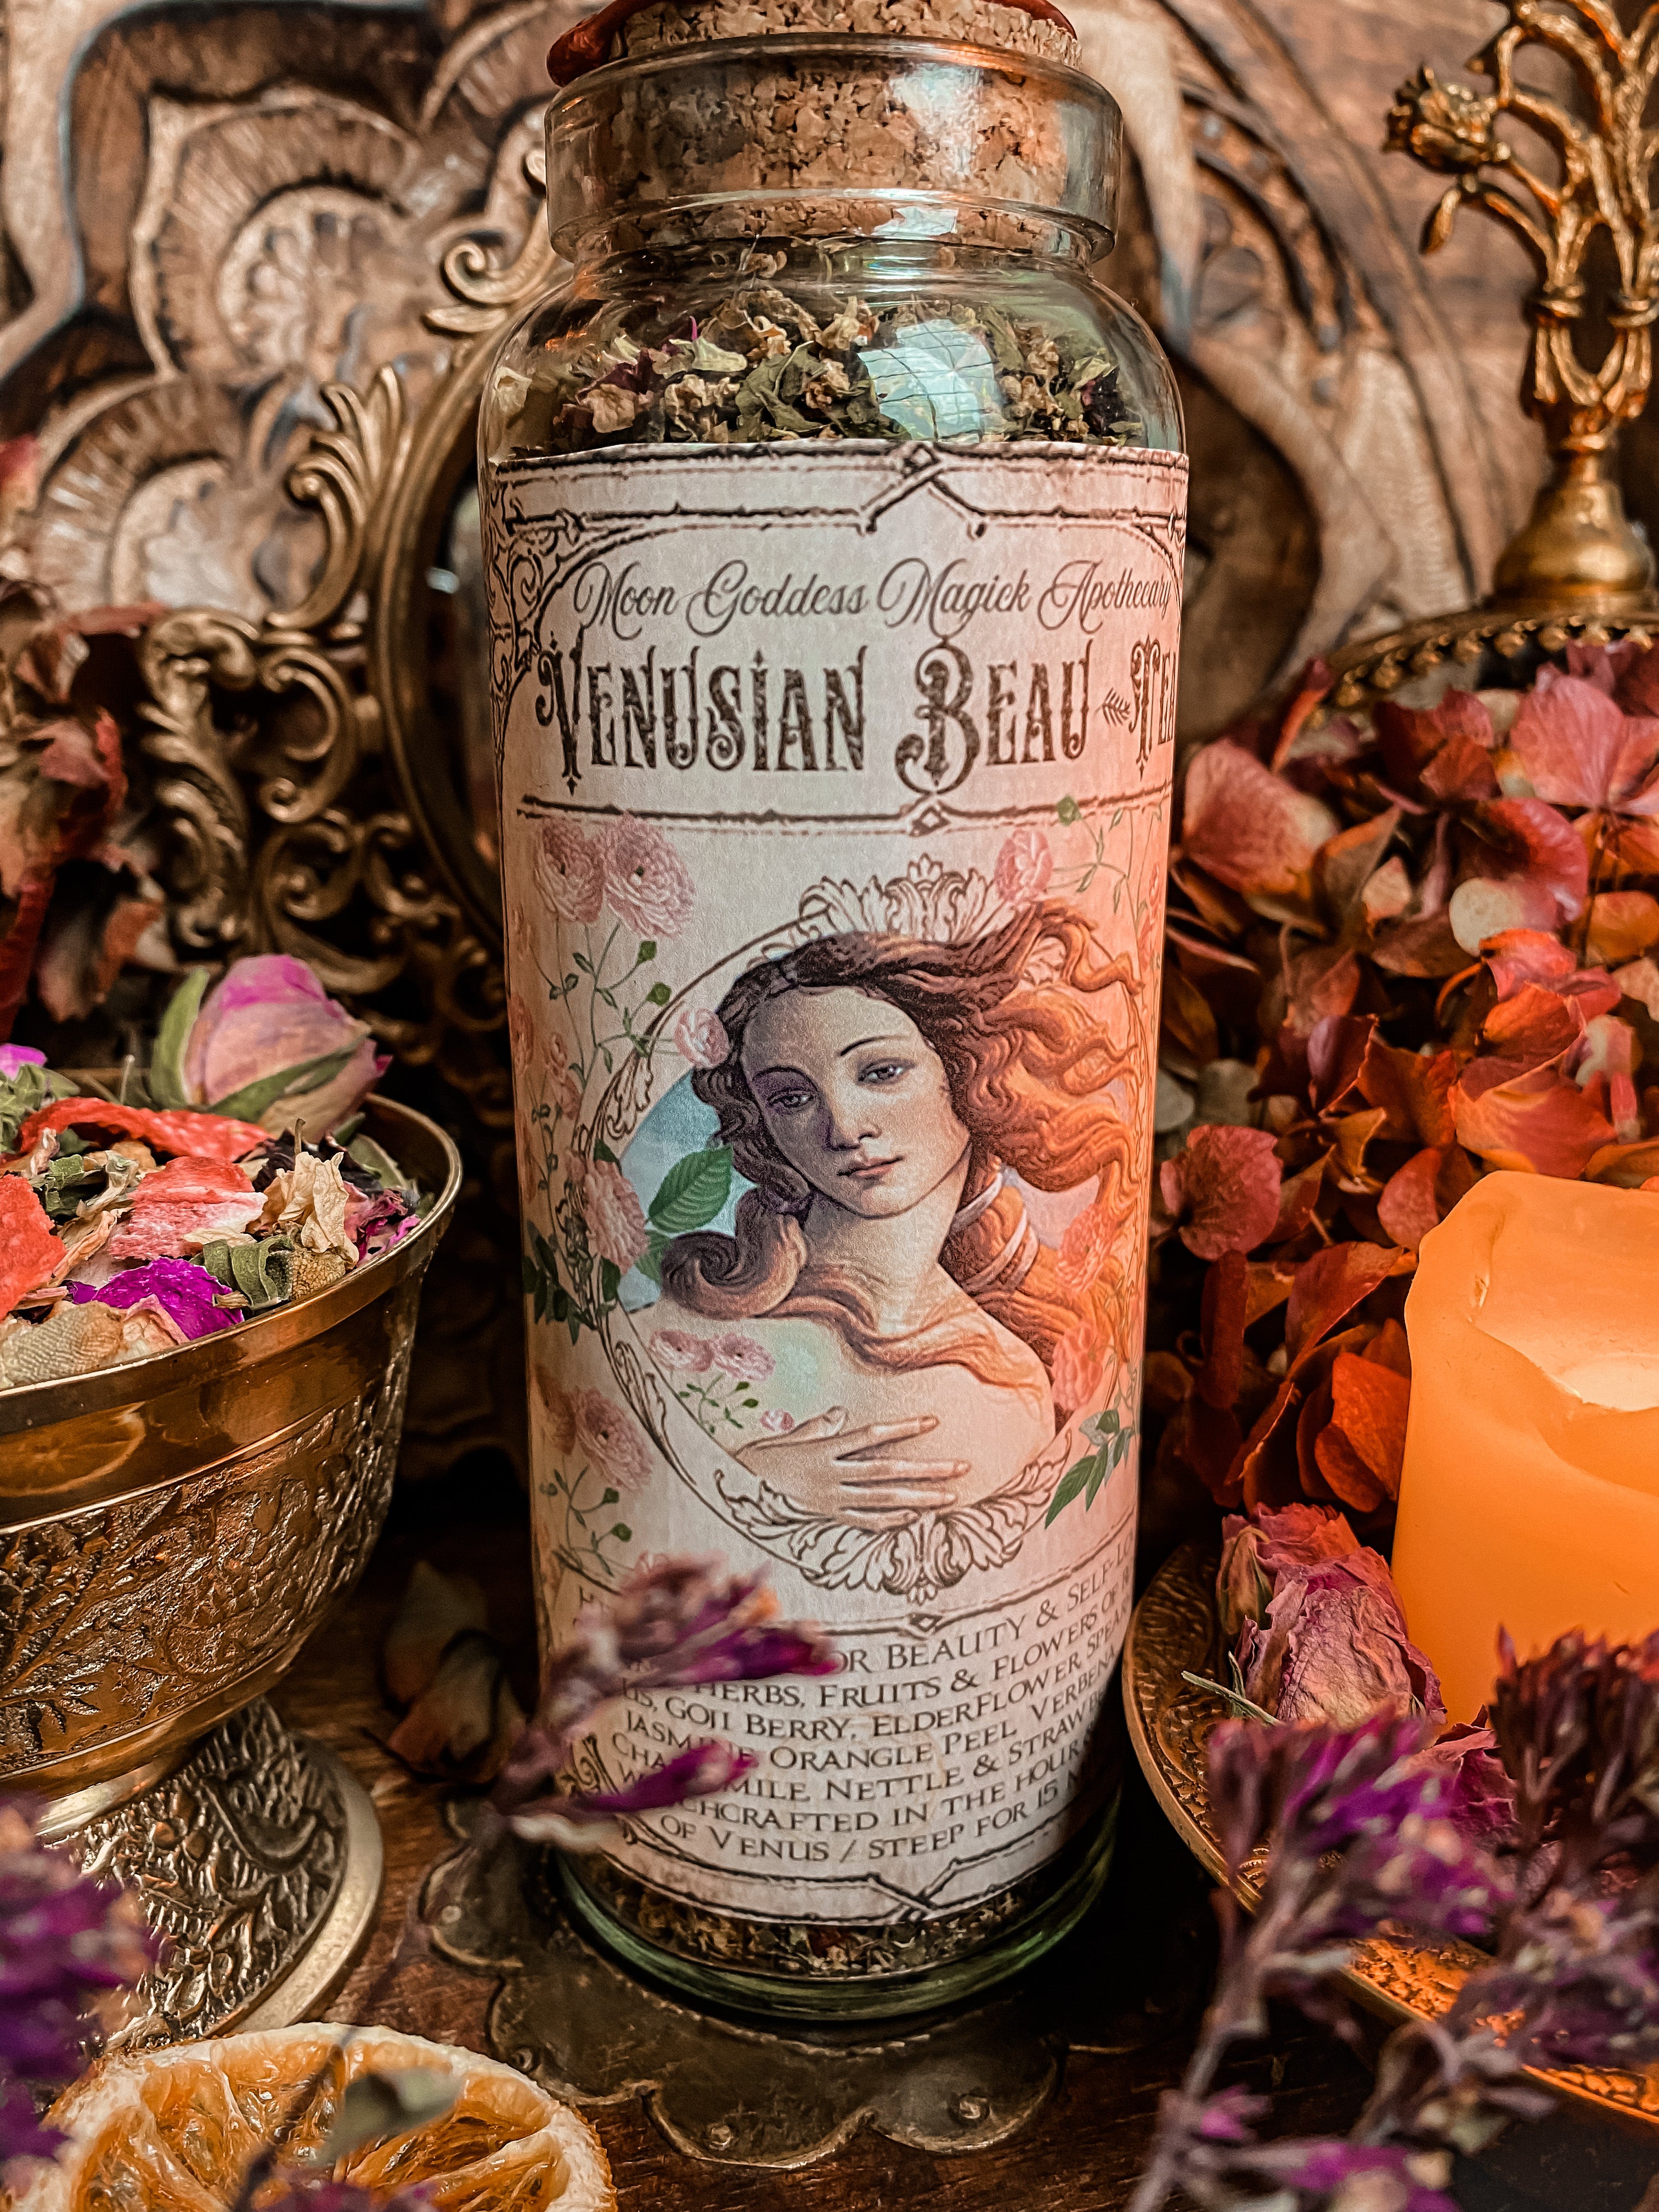 Venusian Beau-Tea /// Organic Herbal Tea For Beauty & Self-Love Rituals /// Good for Hair, Skin & Nails /// 8 oz glass Jar with Cork.